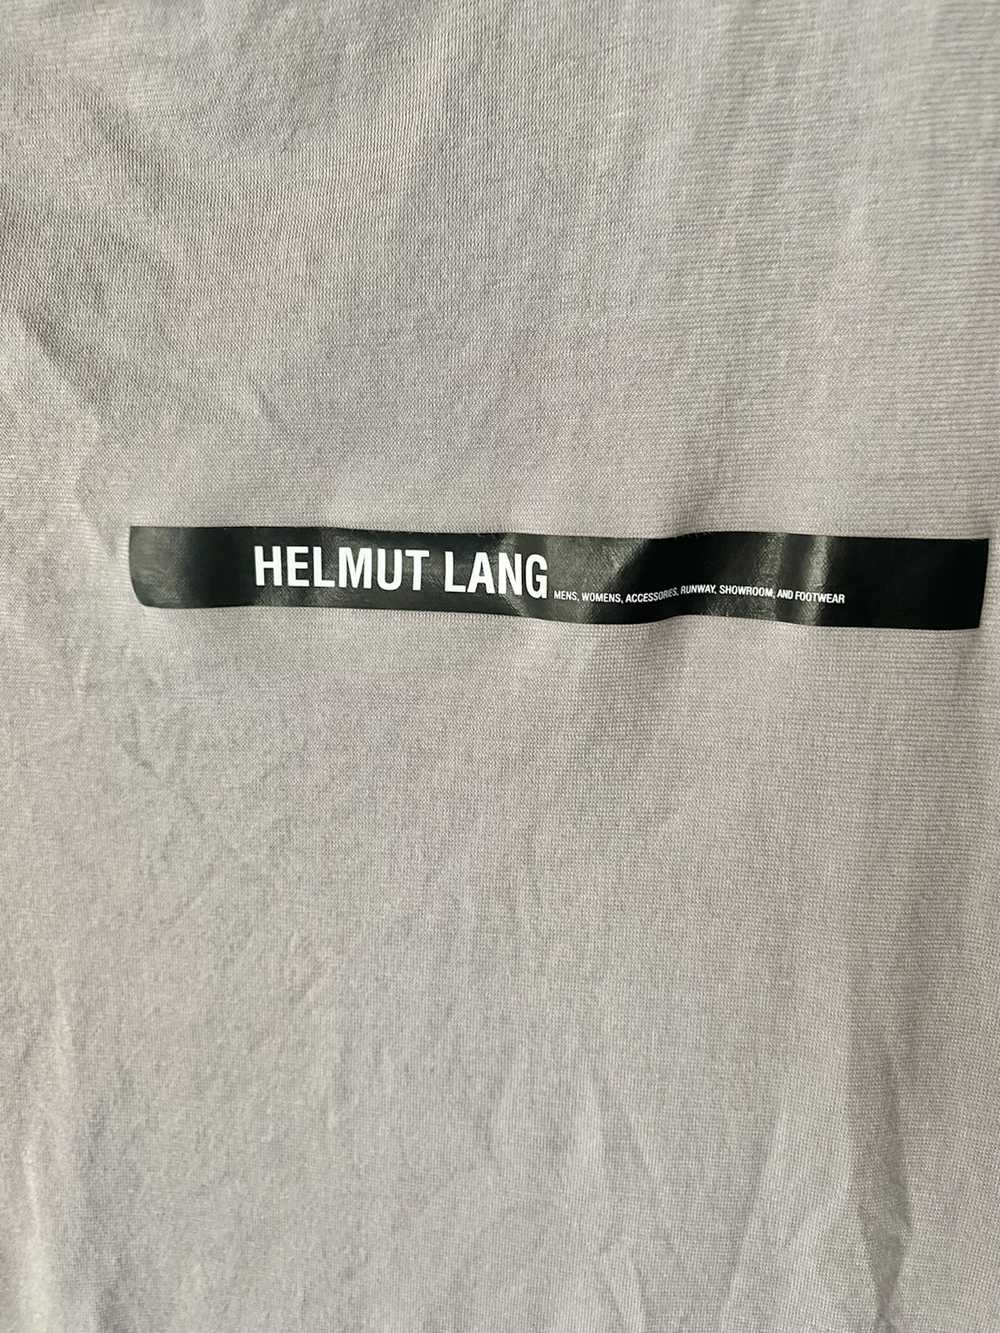 Helmut Lang Sample Shayne Oliver sleeveless Tee - image 3